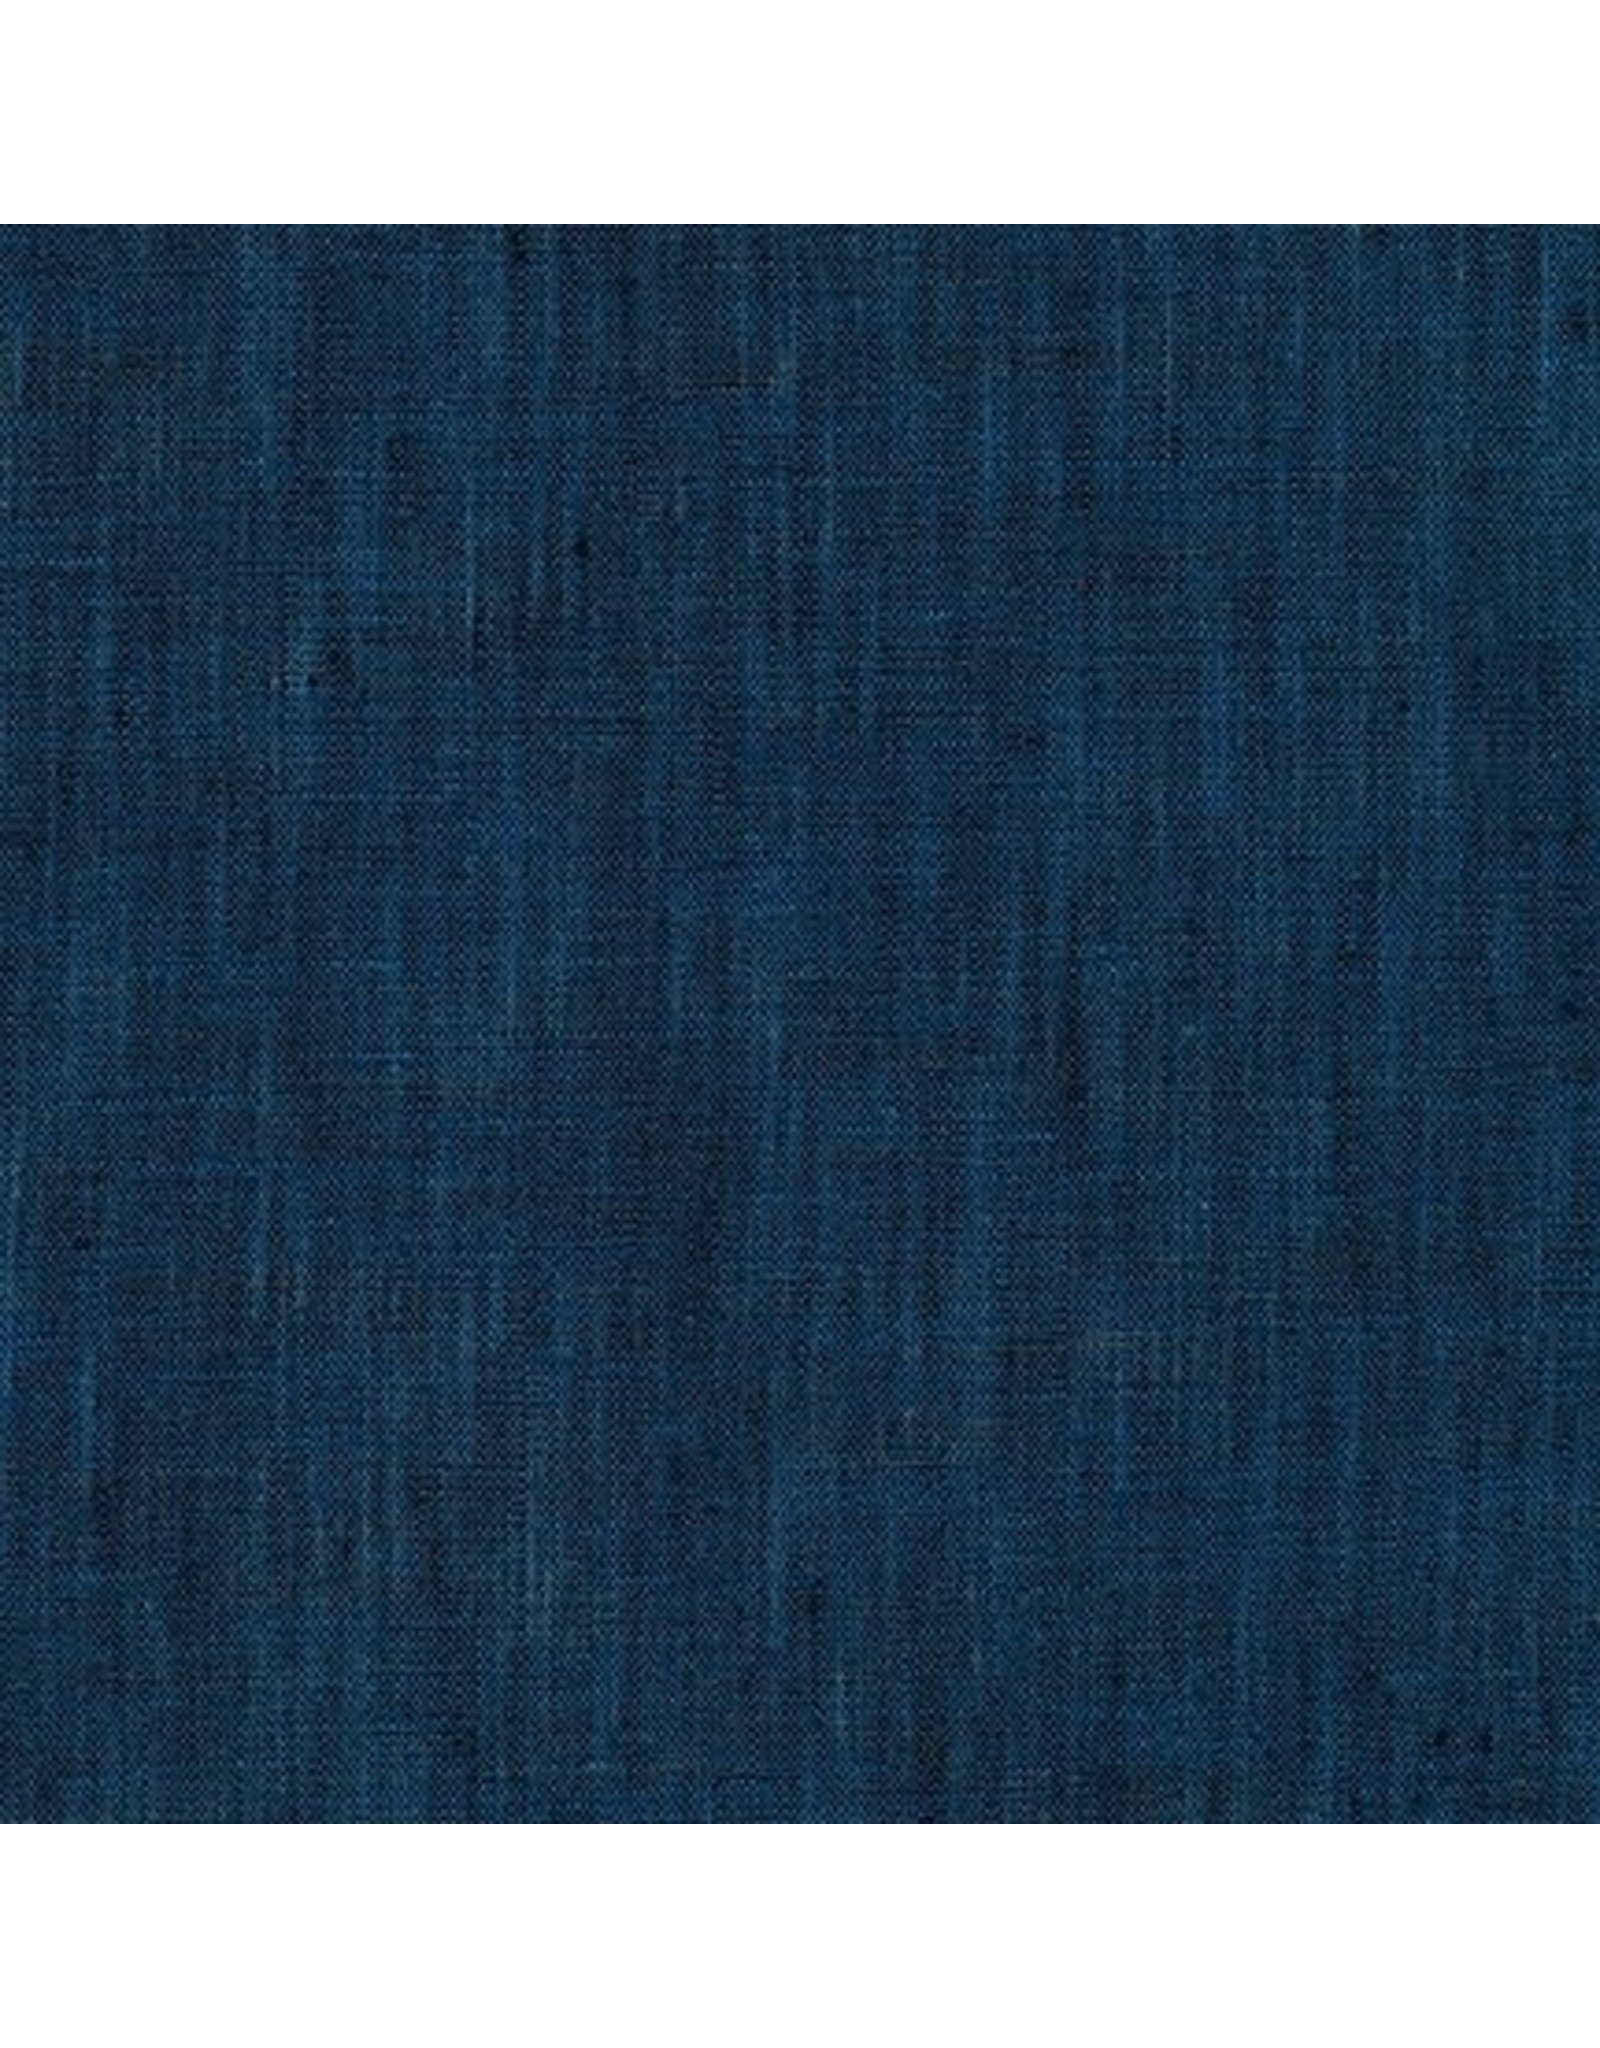 Robert Kaufman Limerick Linen in Indigo, Fabric Half-Yards